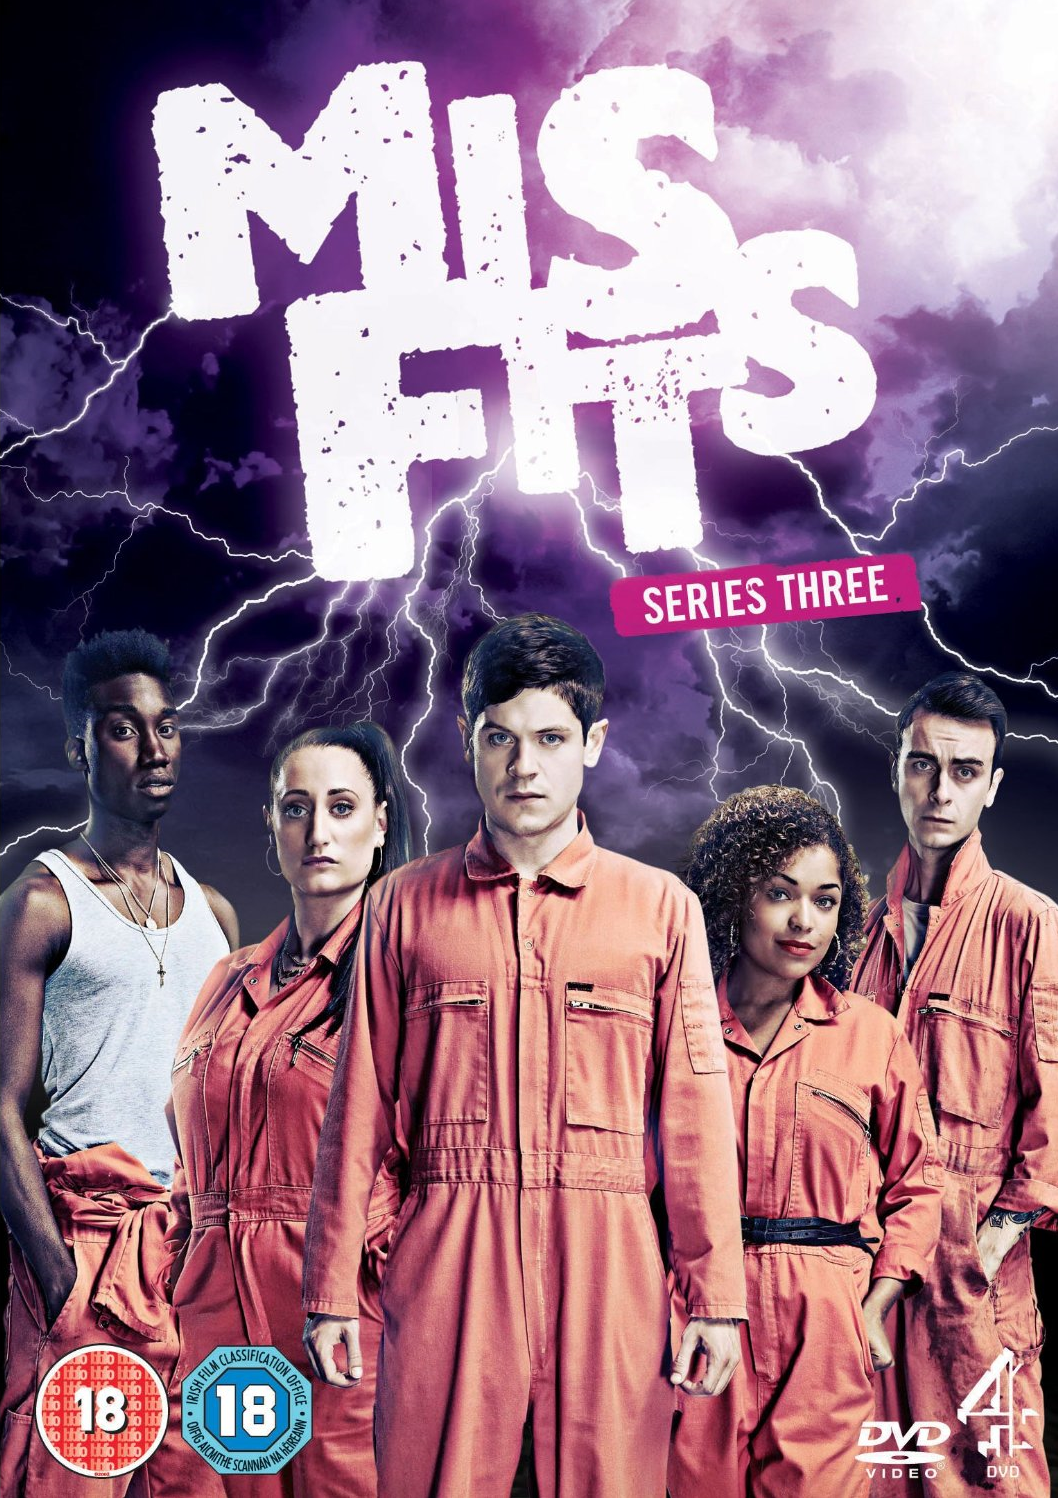 1 season misfits cast Misfits cast: